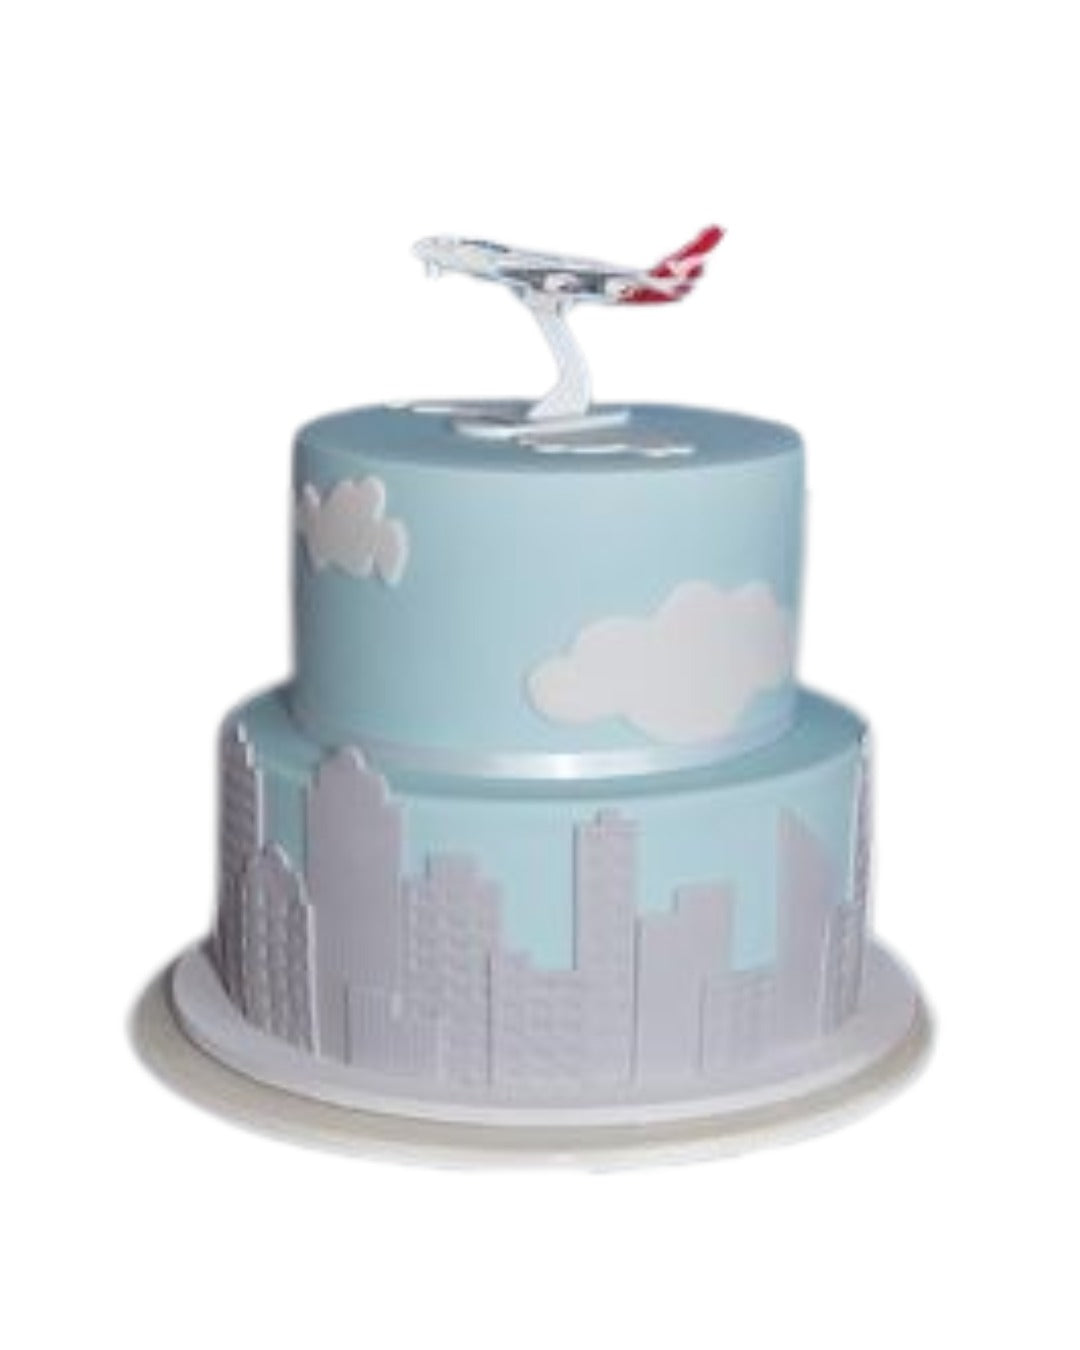 Airplane Cake For Boys 6